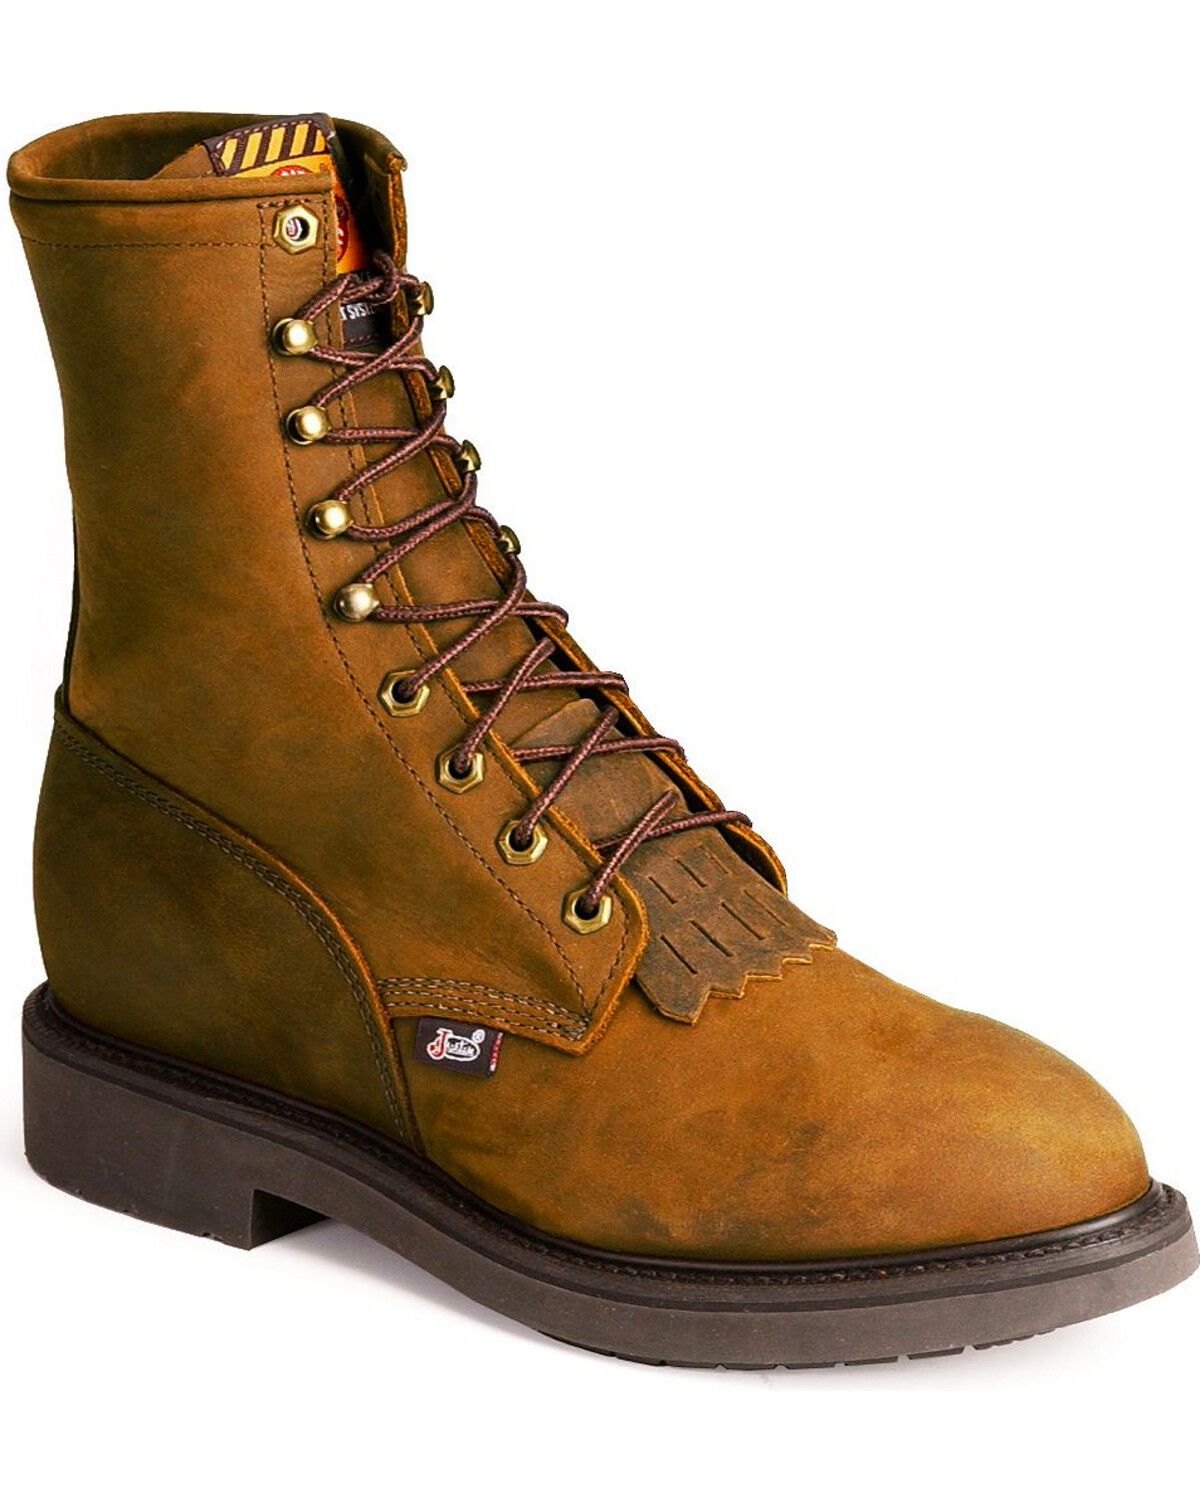 steel toe boots for men near me